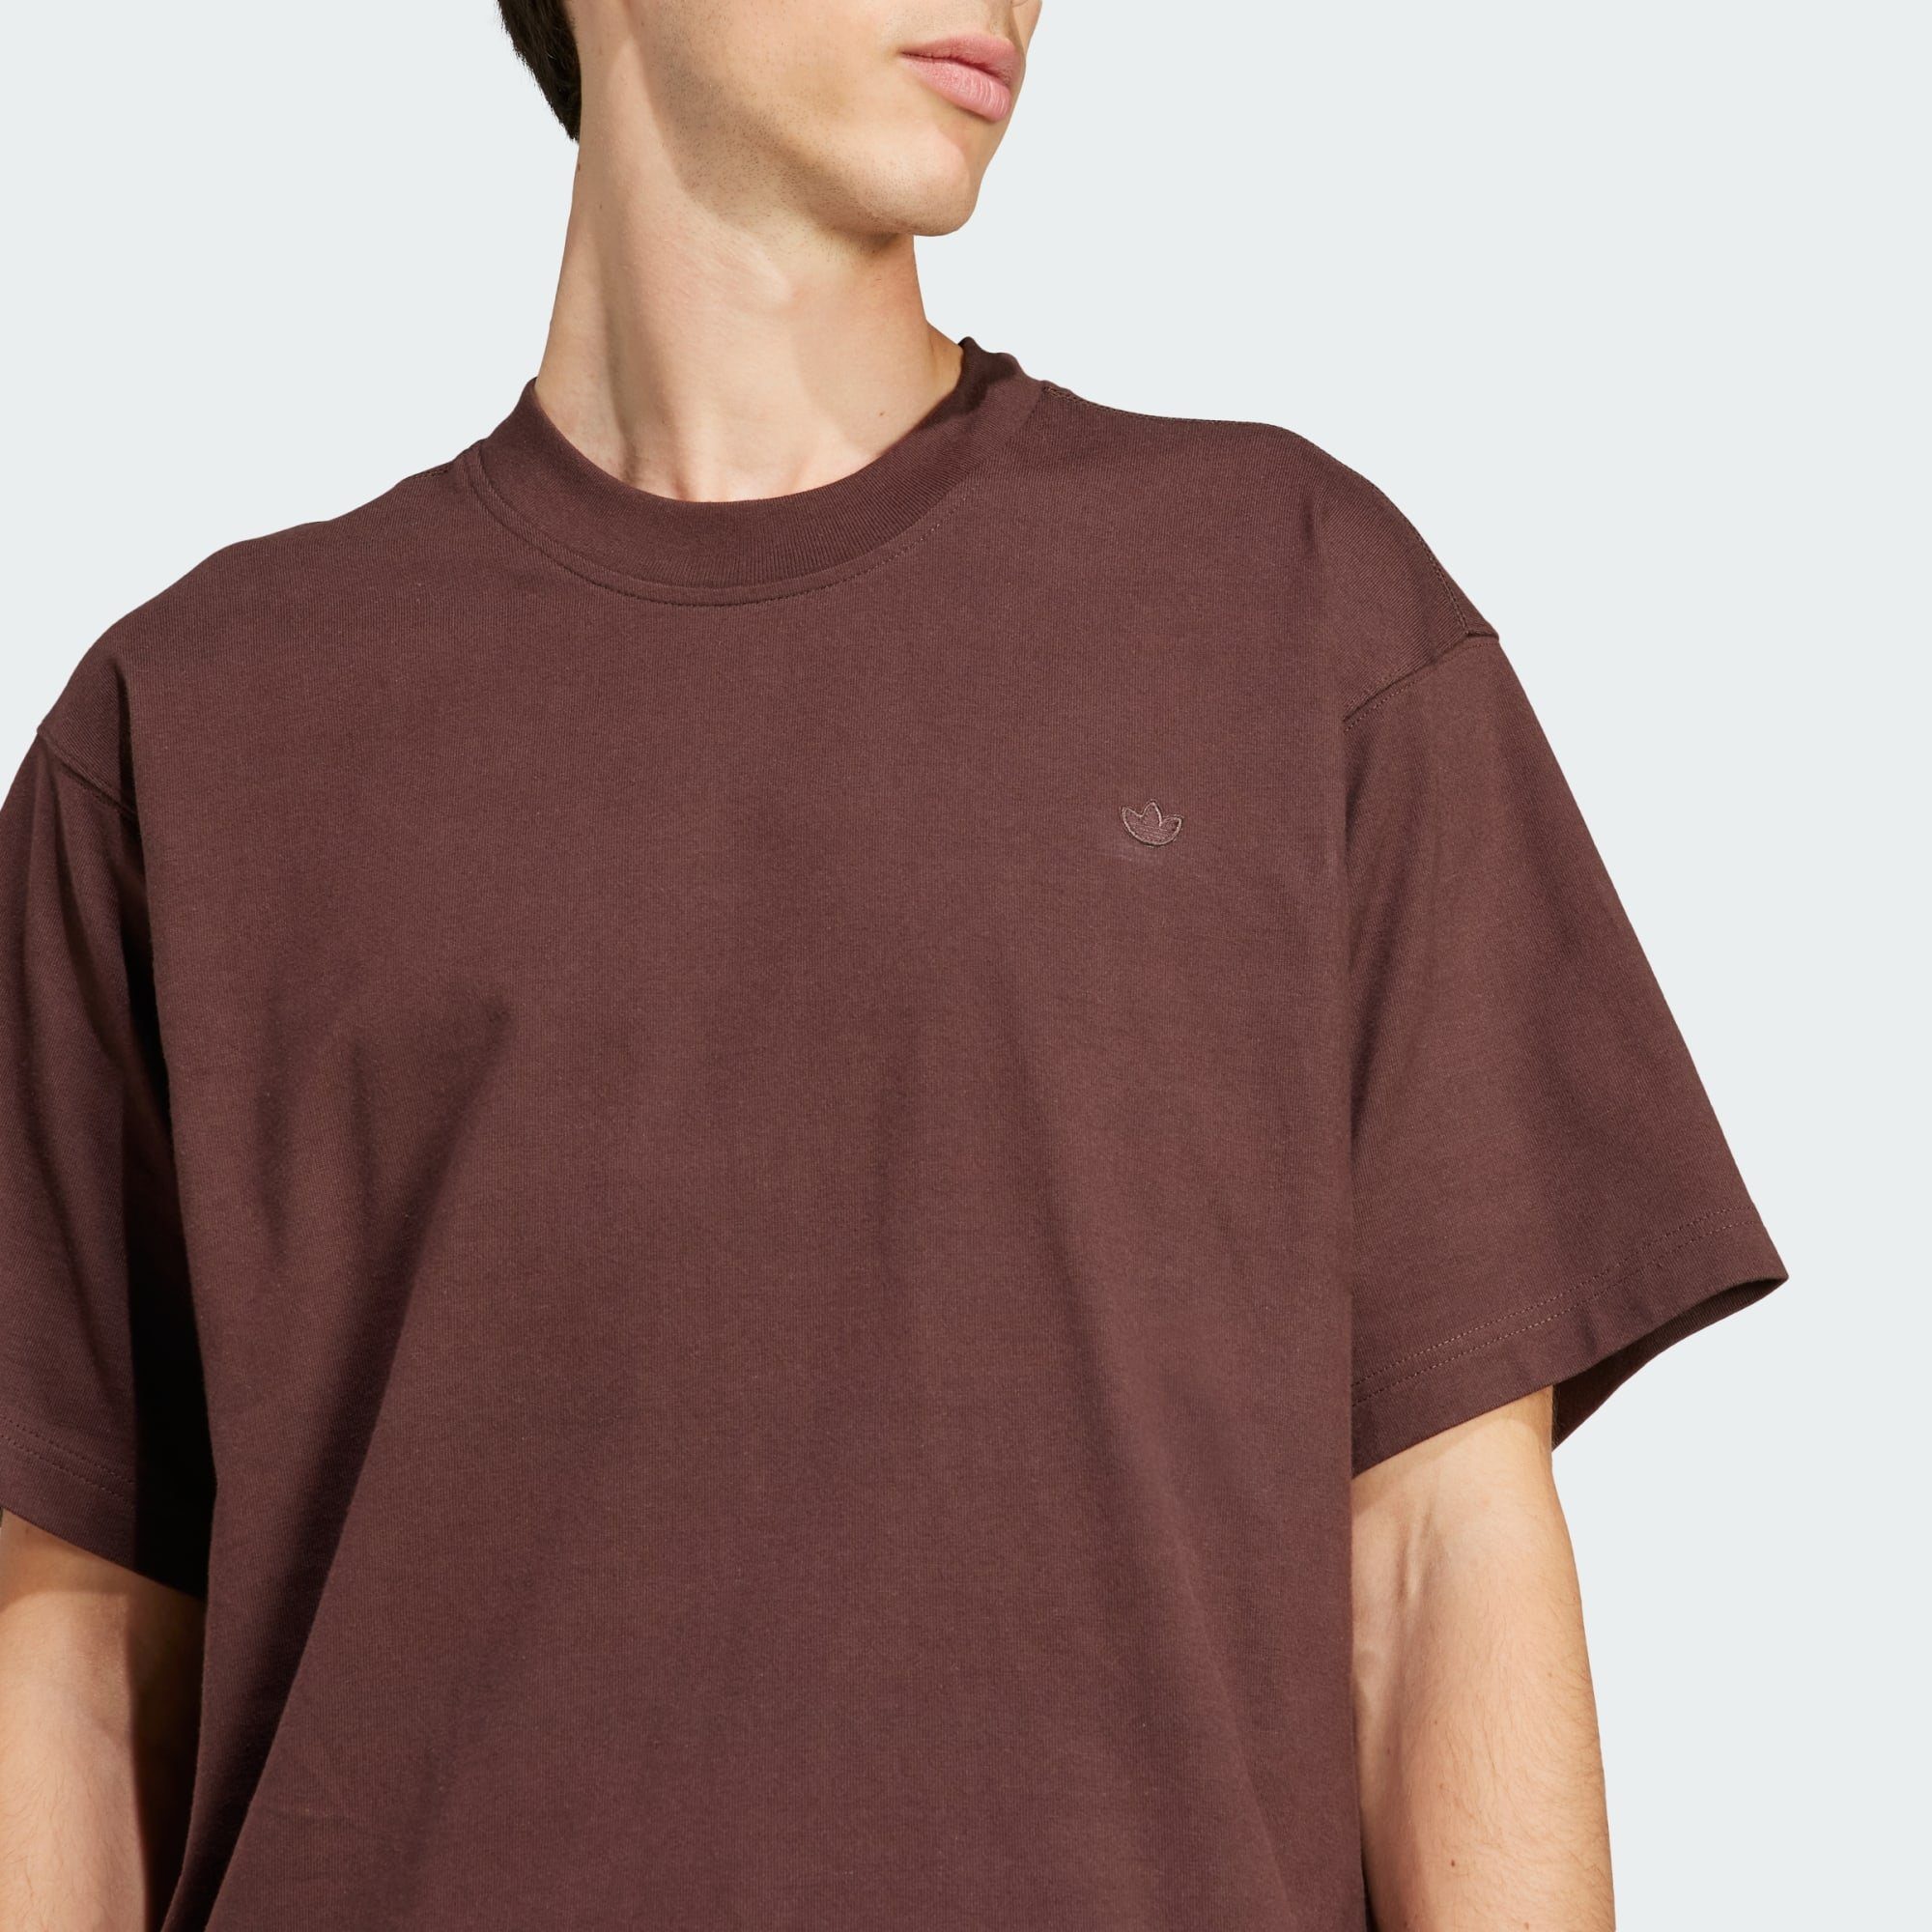 Originals Brown ADICOLOR CONTEMPO T-SHIRT adidas Shadow T-Shirt